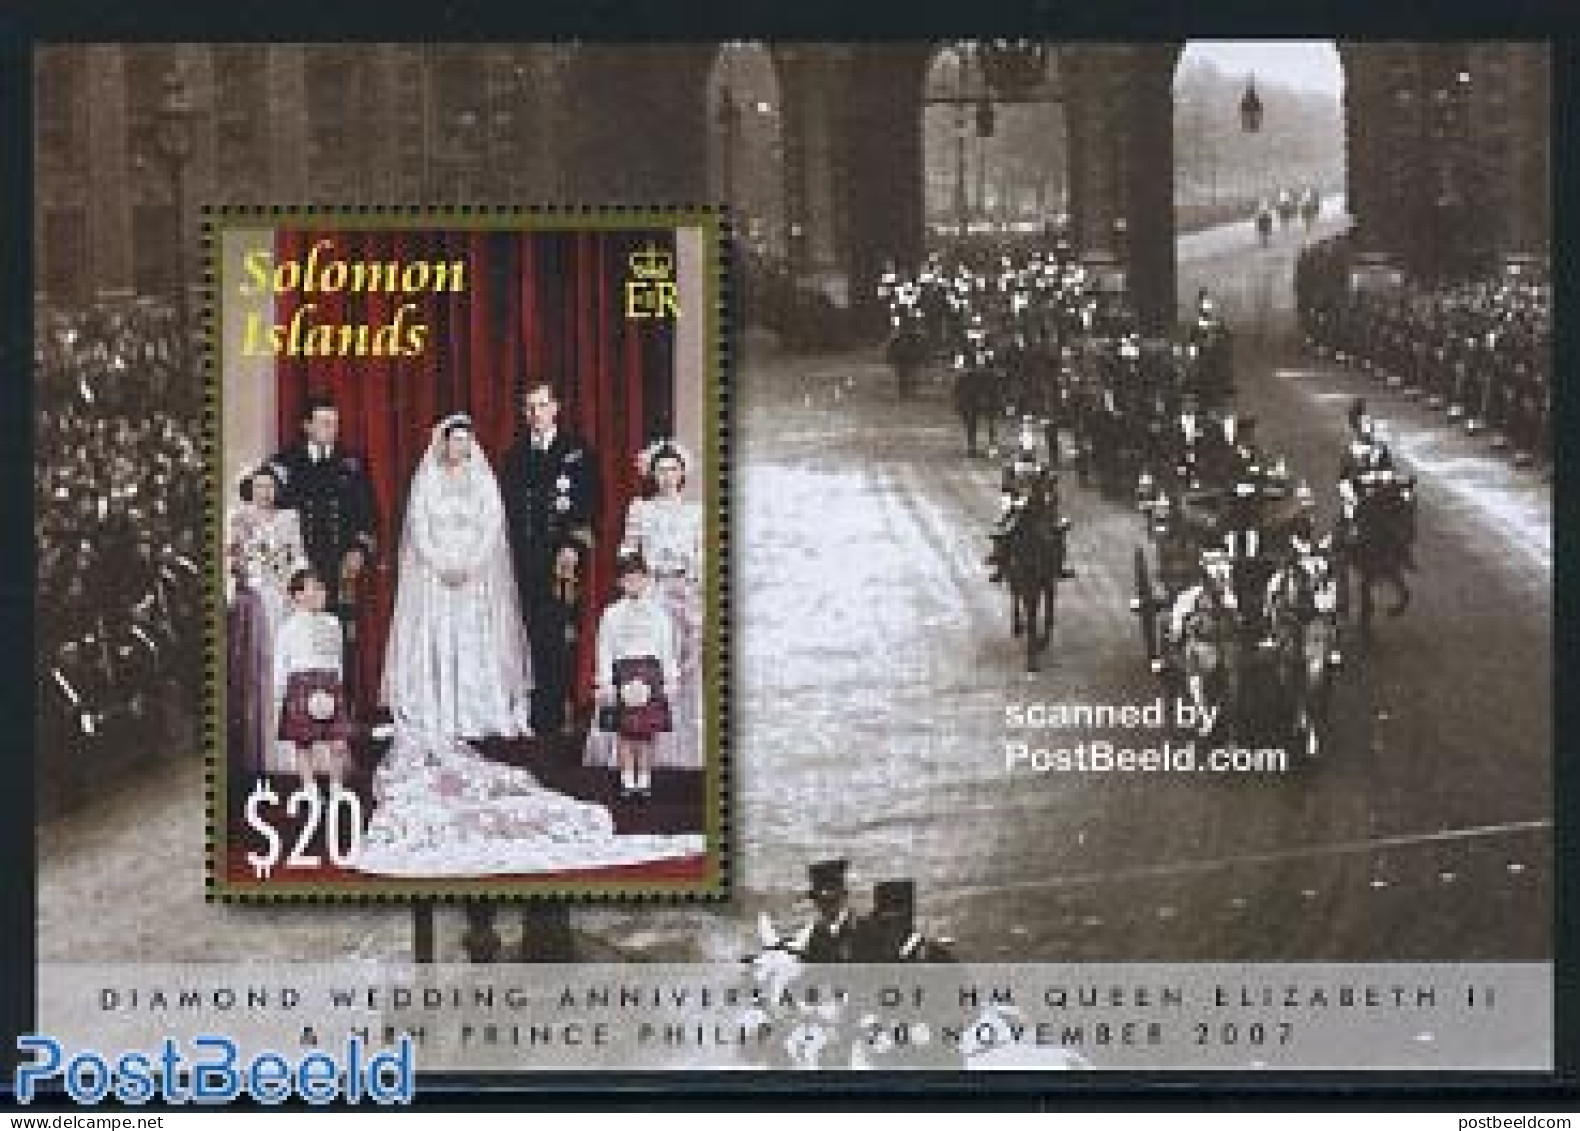 Solomon Islands 2007 Elizabeth II Diamond Wedding S/s, Mint NH, History - Kings & Queens (Royalty) - Königshäuser, Adel